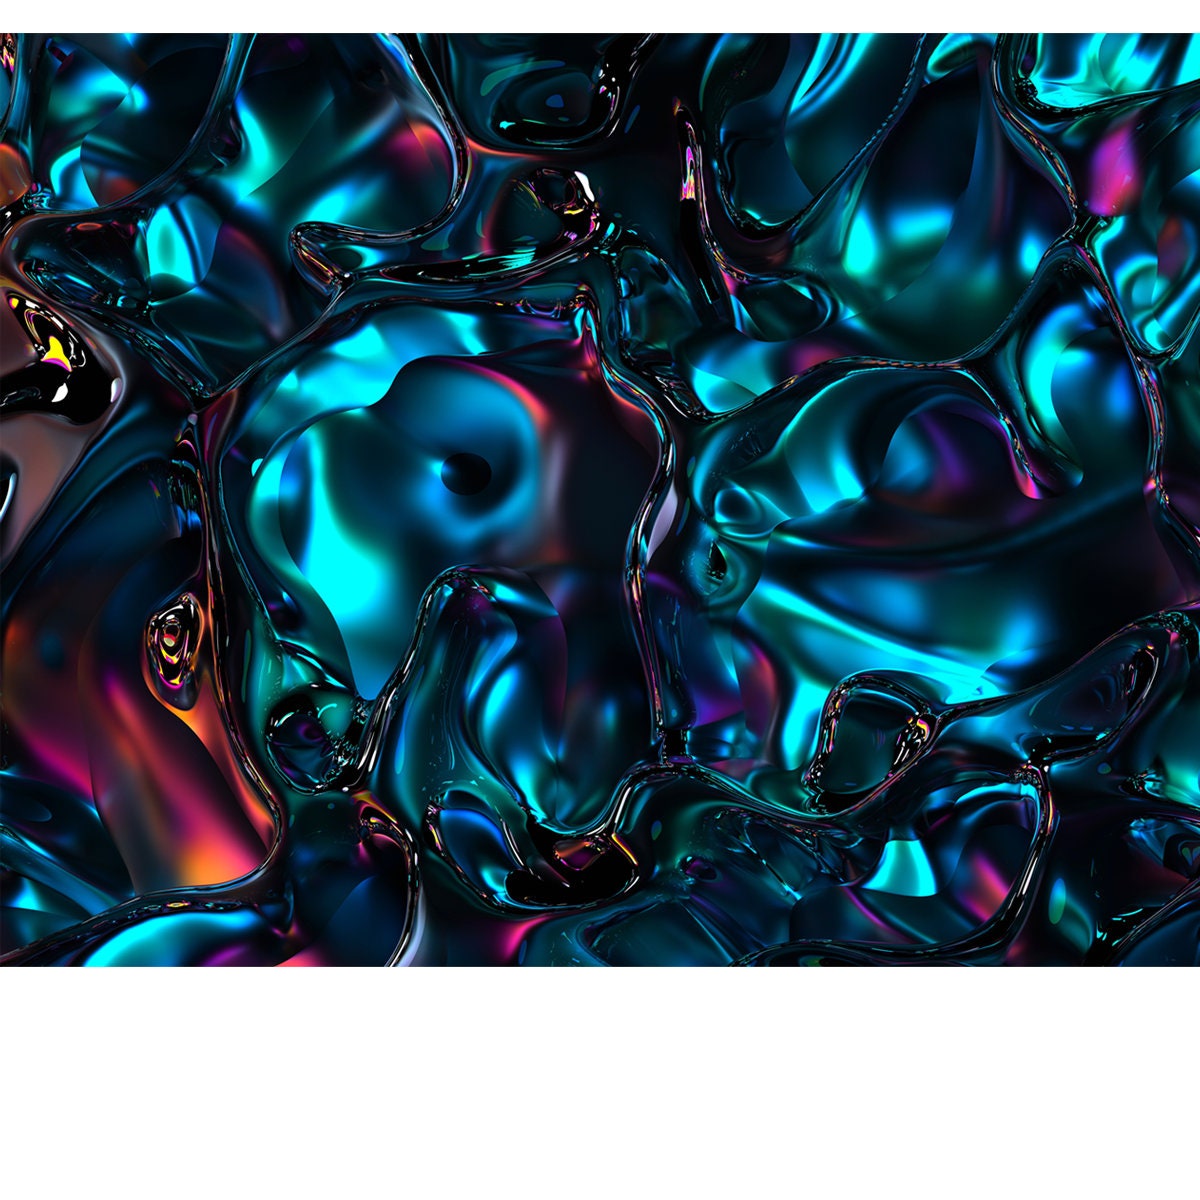 3d Render of Abstract Art 3d Background Texture with Part of Surreal Dark Mystic Substance in Liquid Metal Plasma Wallpaper Girl Mural